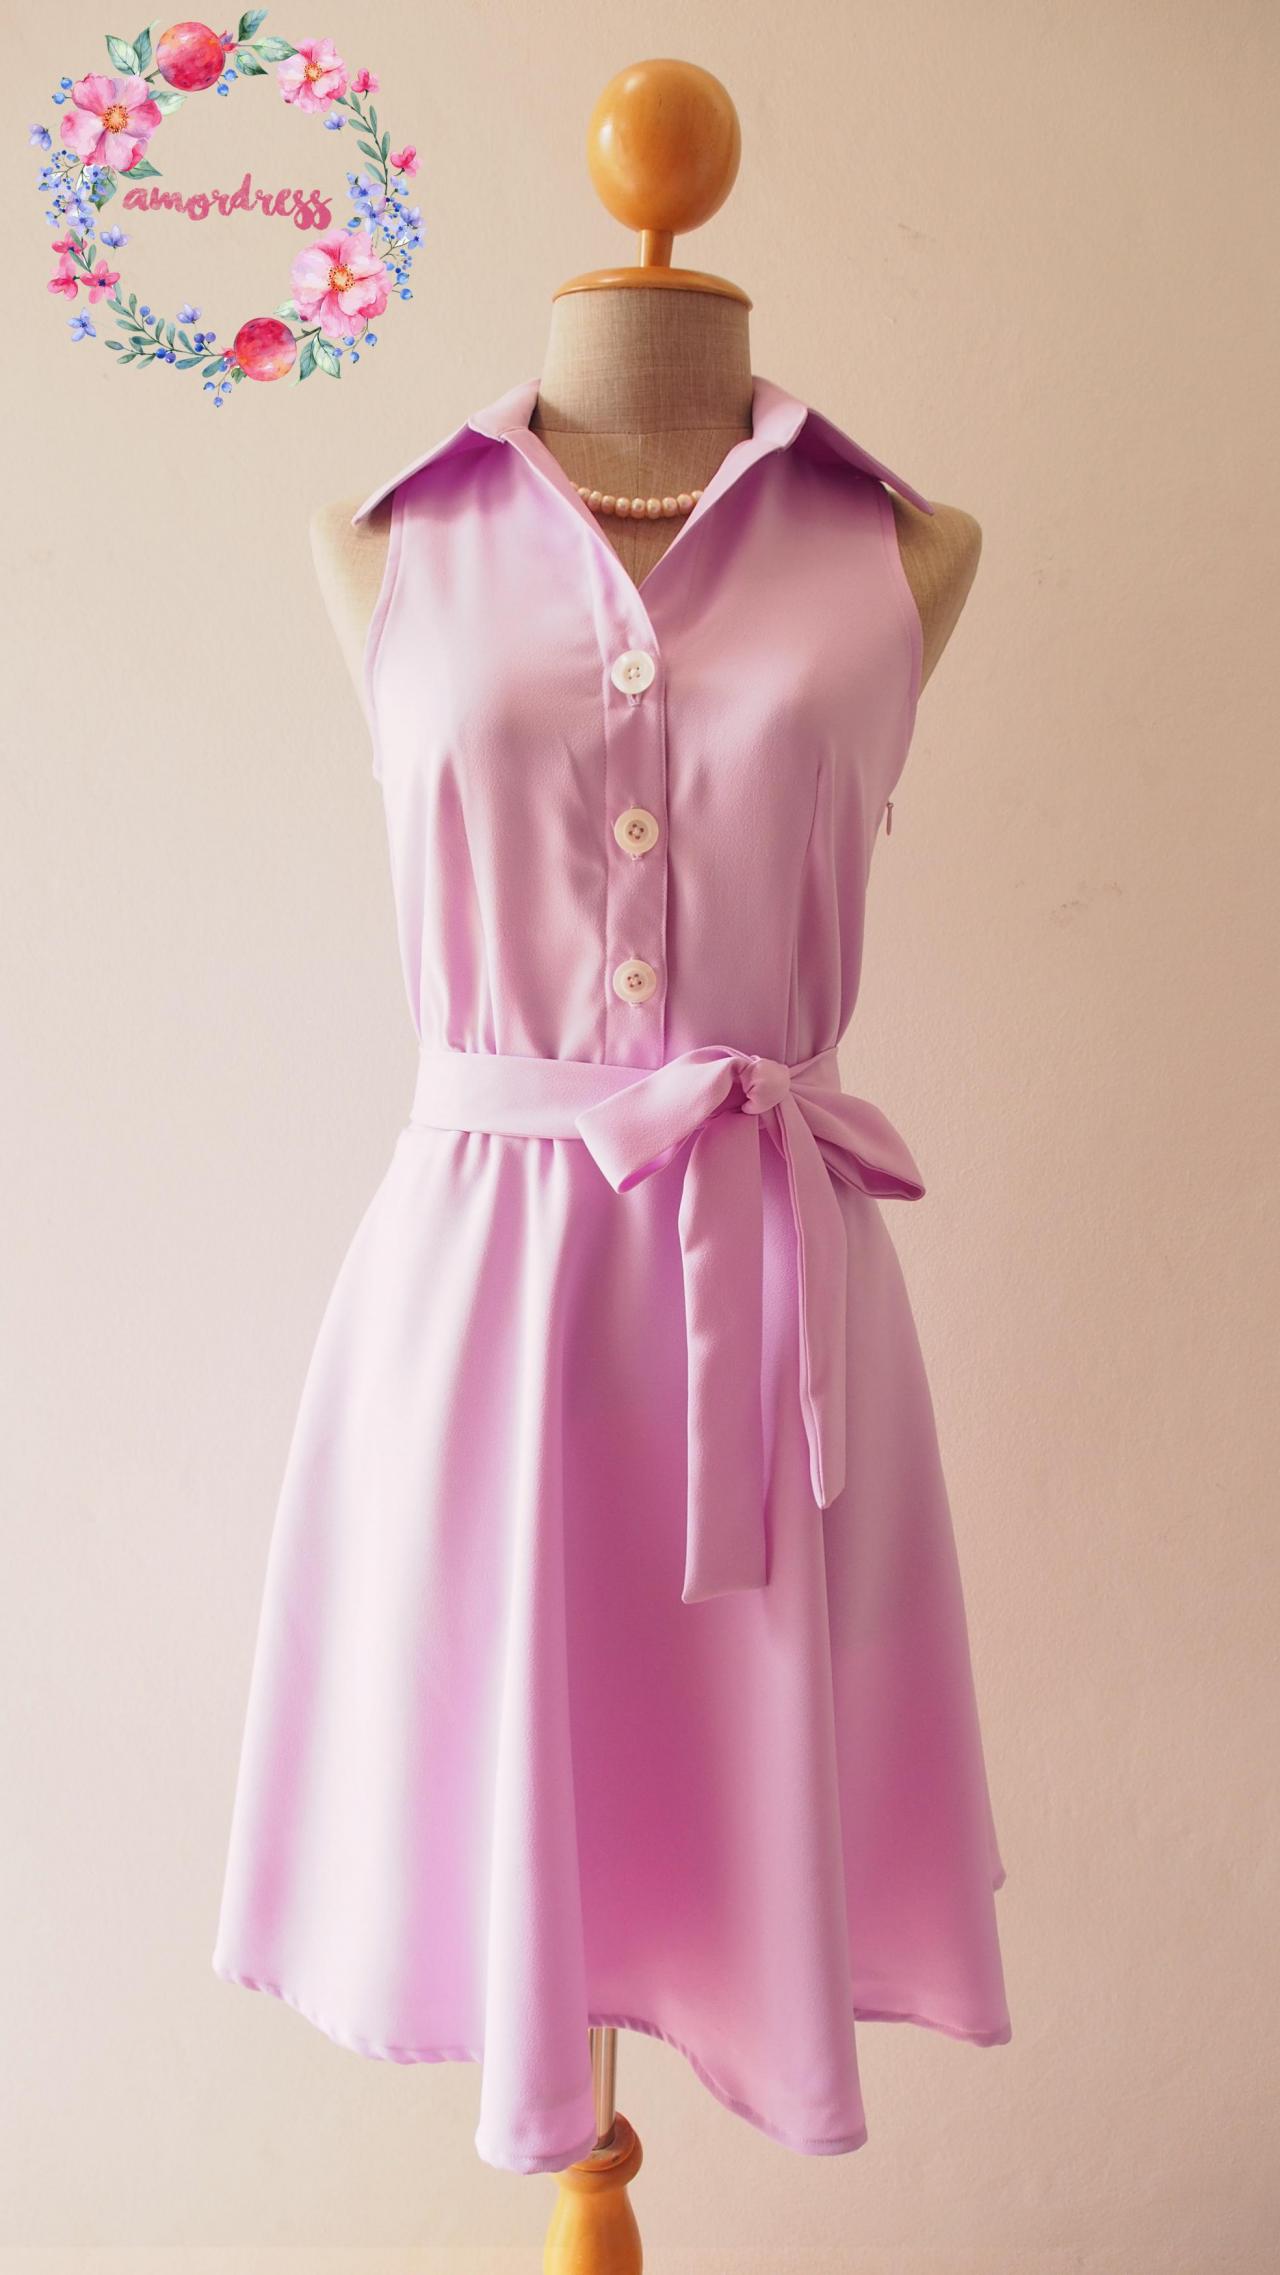 Lavender Dress,Lilac Bridesmaid Dress, Lilac Summer Dress, Lavender Dress, Shirt Dress, Skater Dress, Midi Dress, Vintage Sundress, Vintage Inspired Dress, - DOWNTOWN - XS-XL, Custom